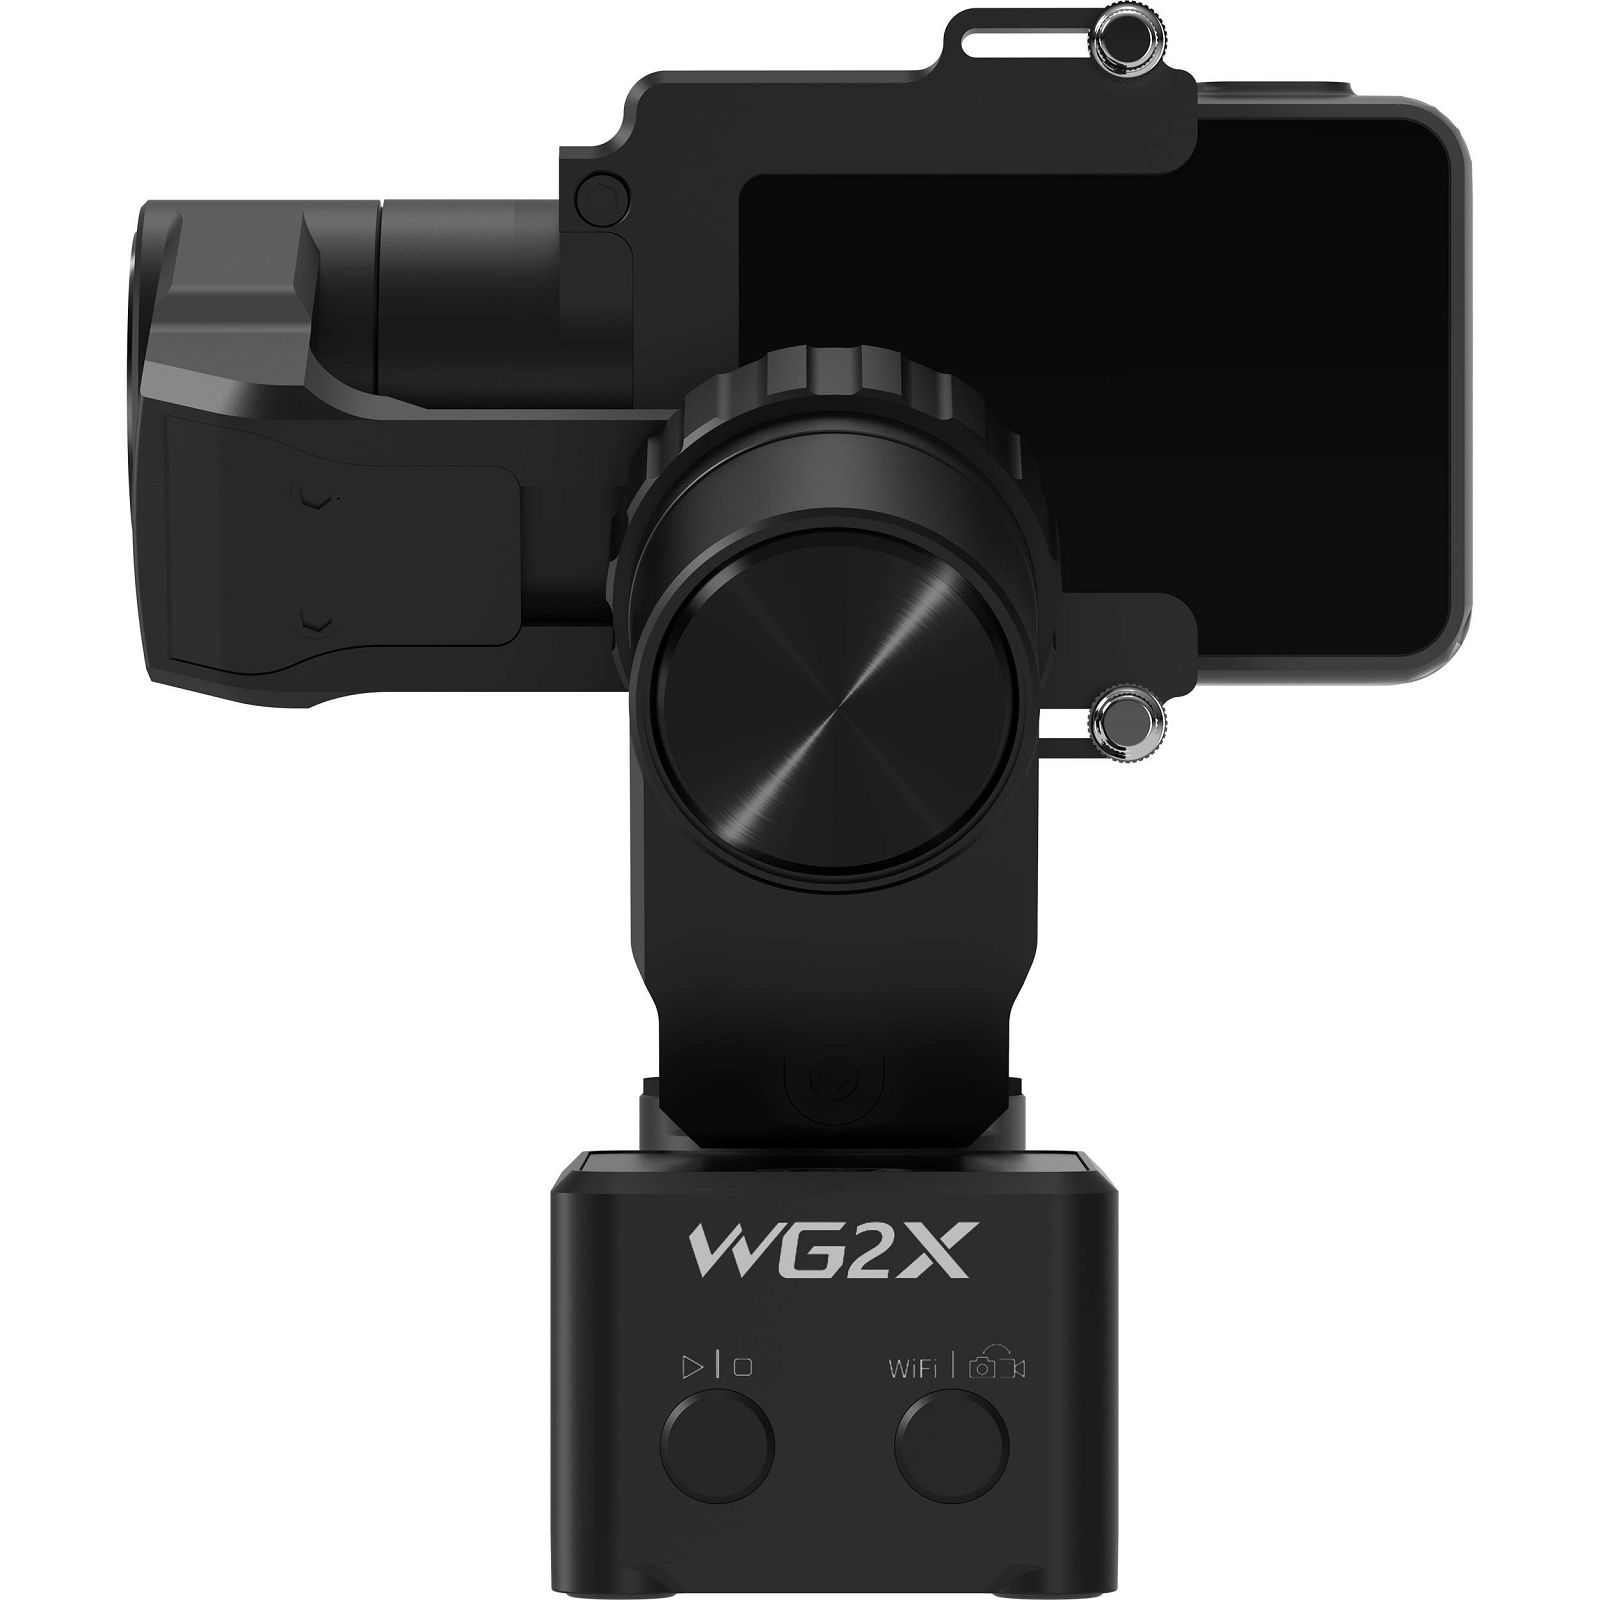 FeiyuTech WG2X 3-Axis Wearable Gimbal stabilizer for Action cam GoPro HERO7, HERO6, HERO5, HERO4, HERO3+, HERO3, Yi cam 4K, AEE 3-osni stabilizator za video snimanje